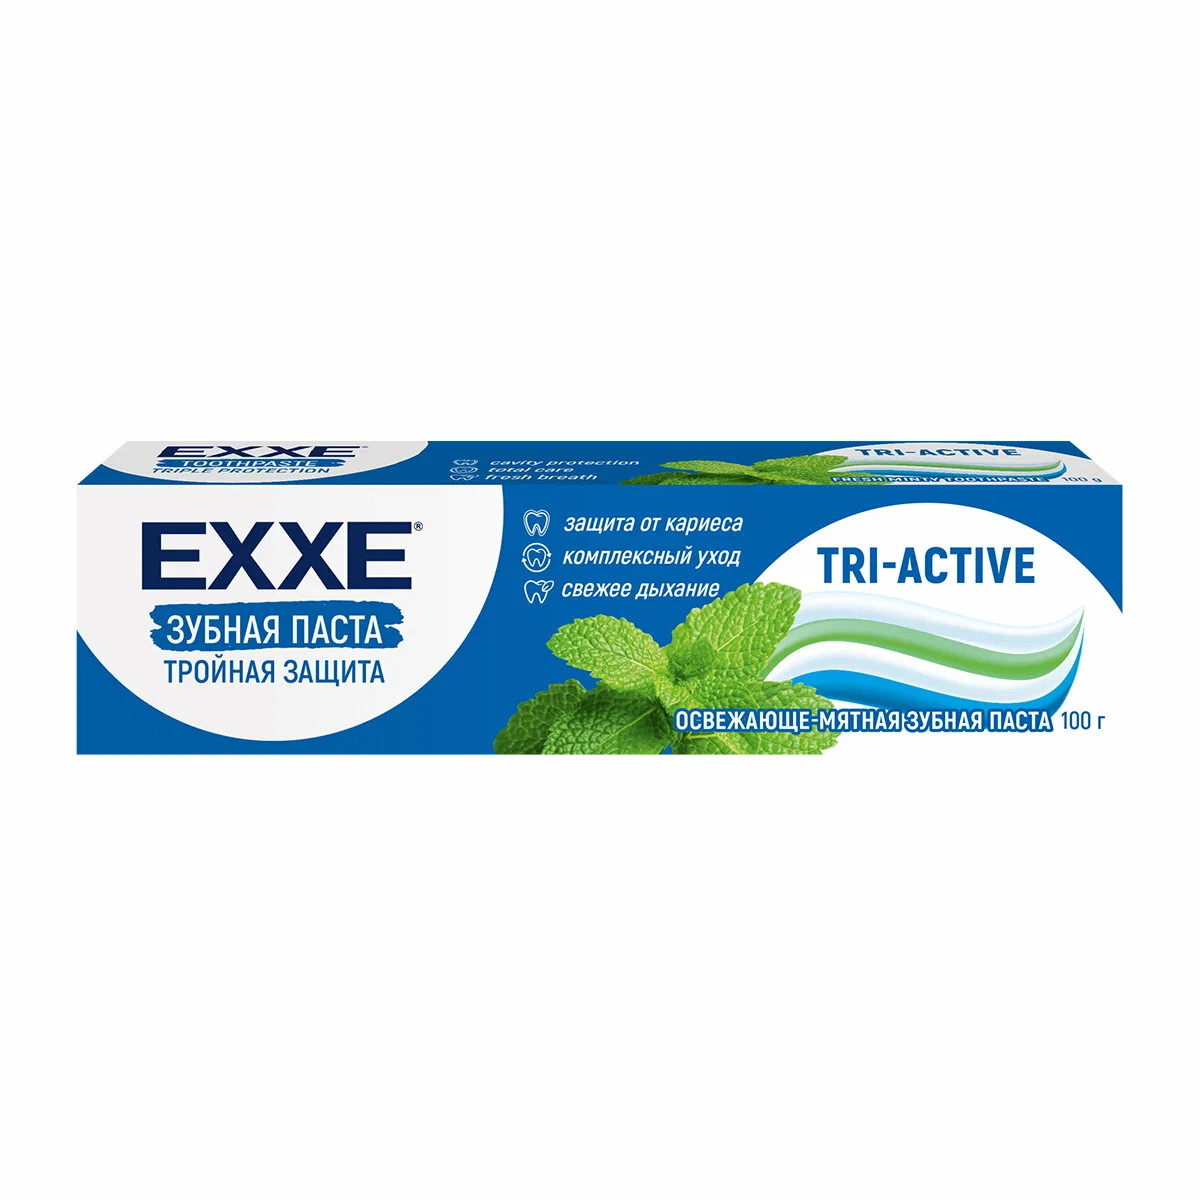 Зубная паста EXXE "Тройная защита" tri-active 7361 100г. (Арвитекс)